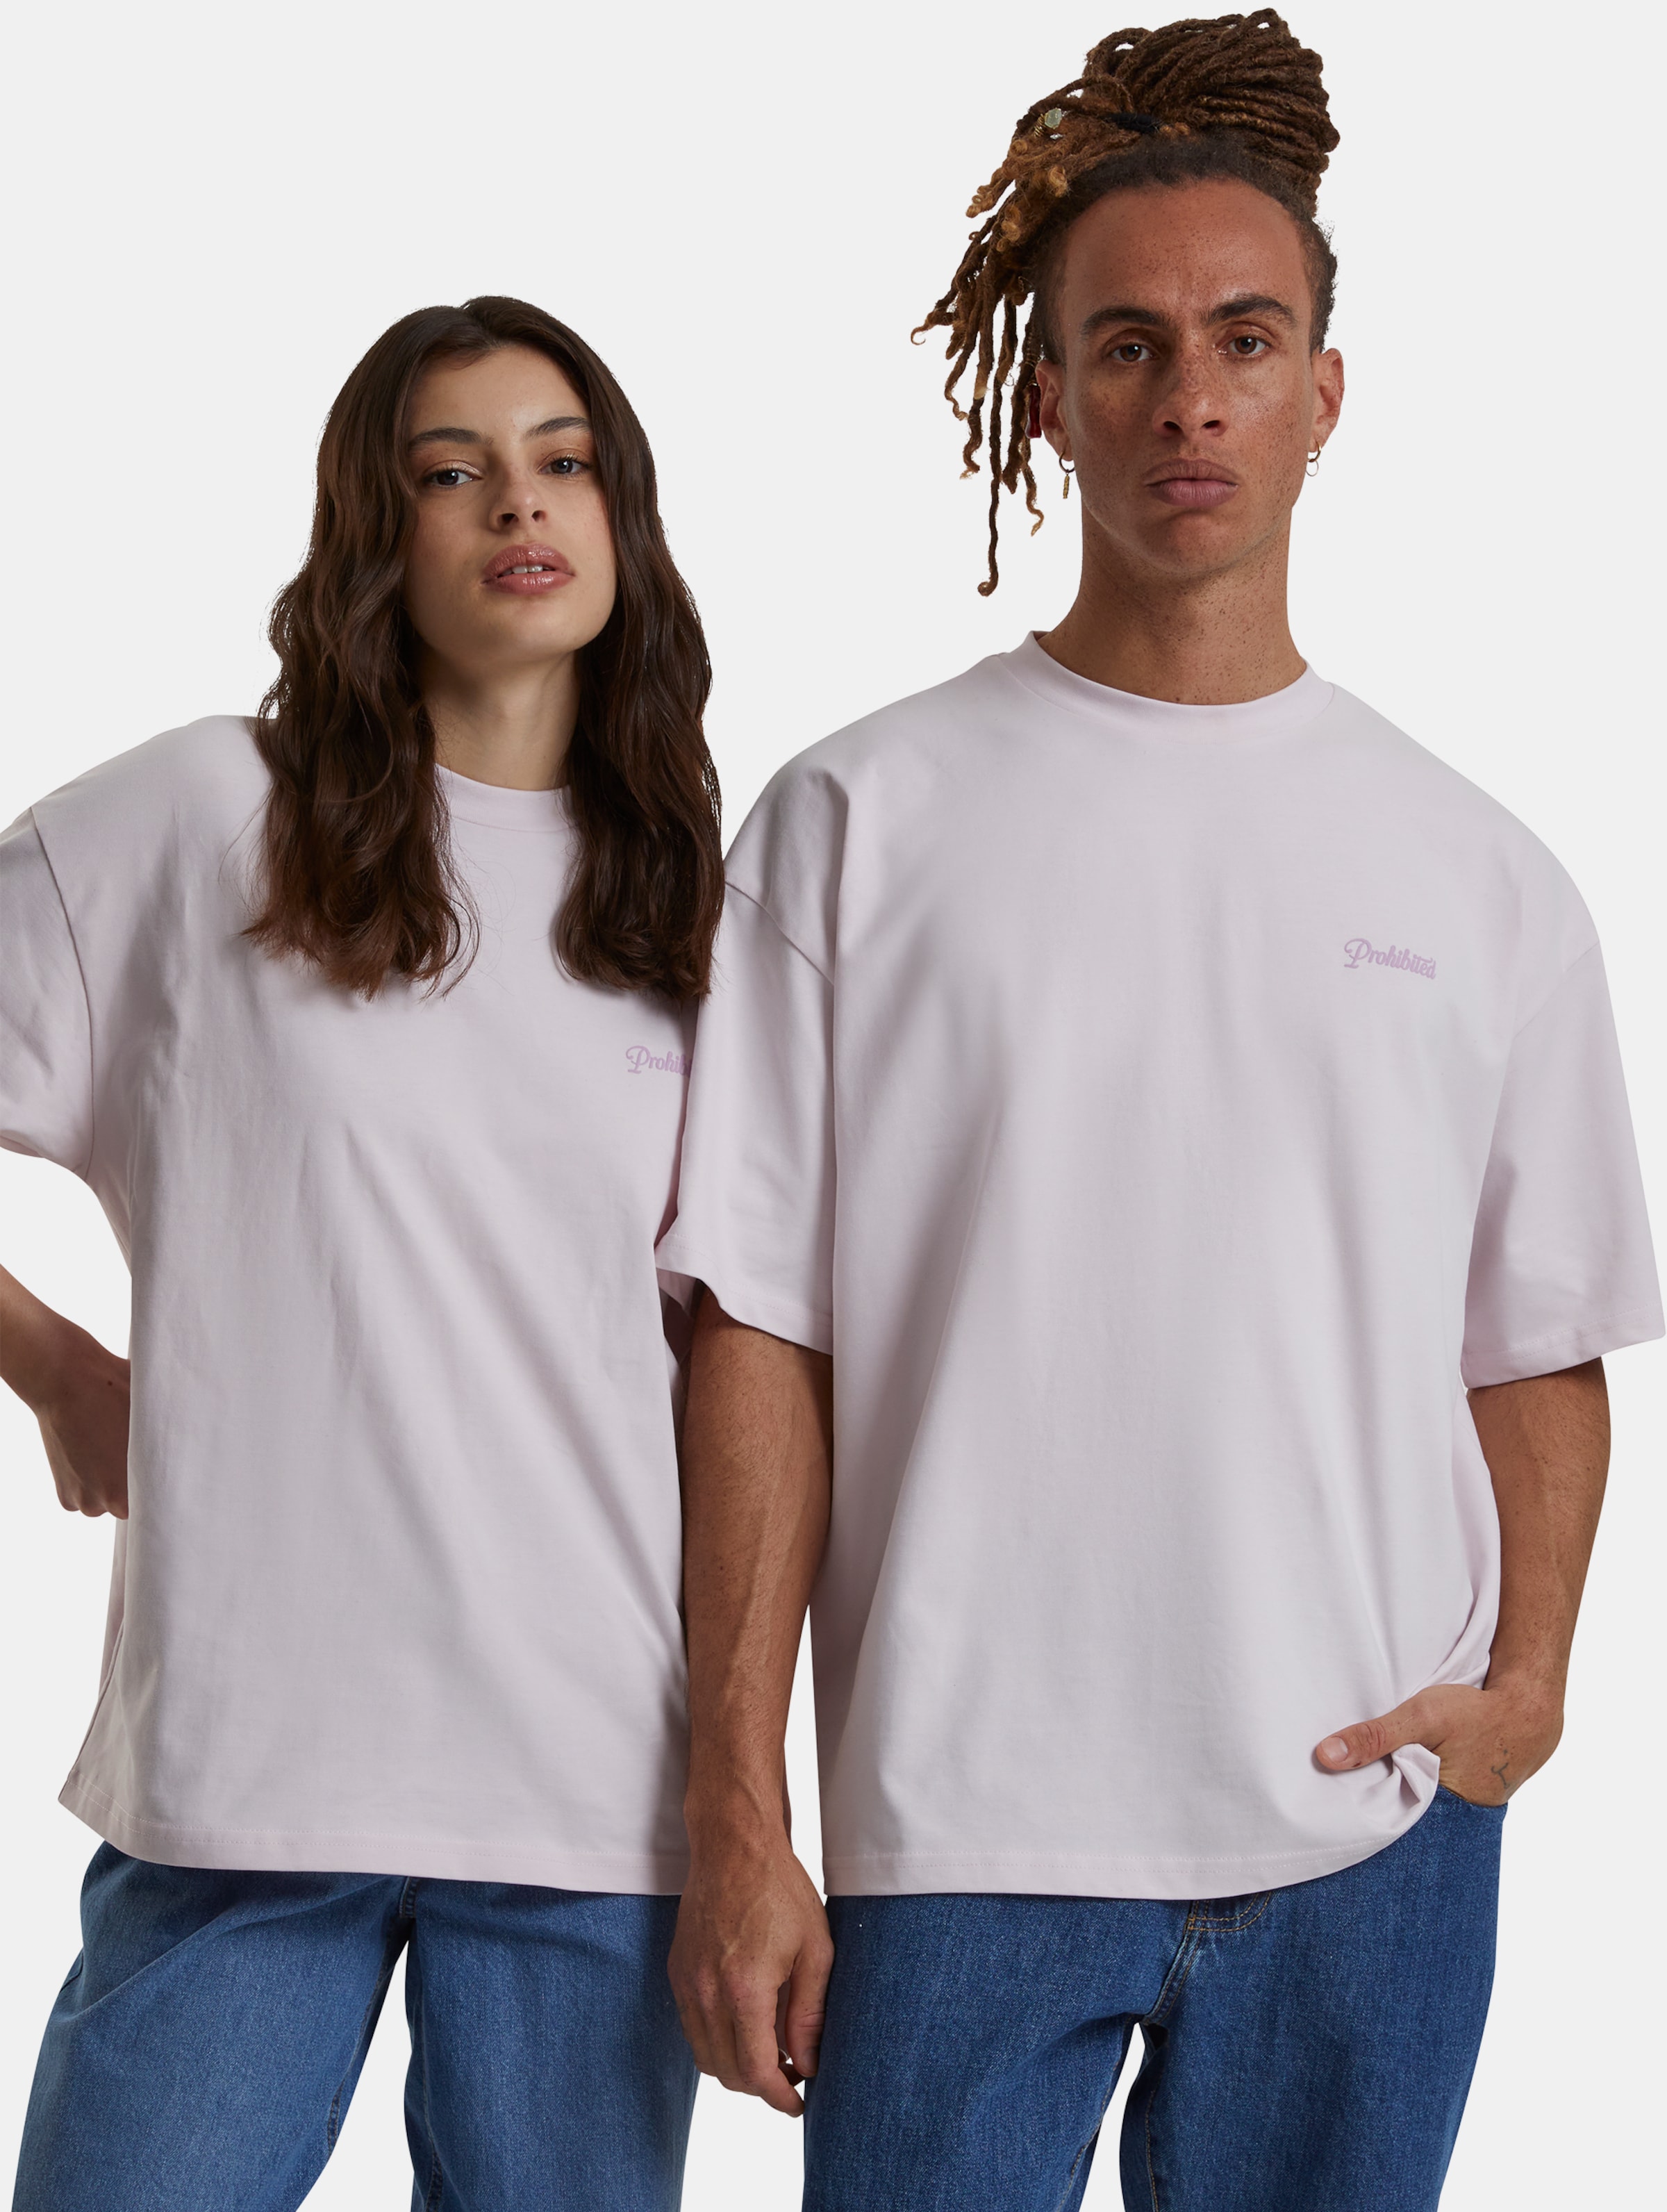 Prohibited 10119 V2 T-Shirts Frauen,Männer,Unisex op kleur roze, Maat M